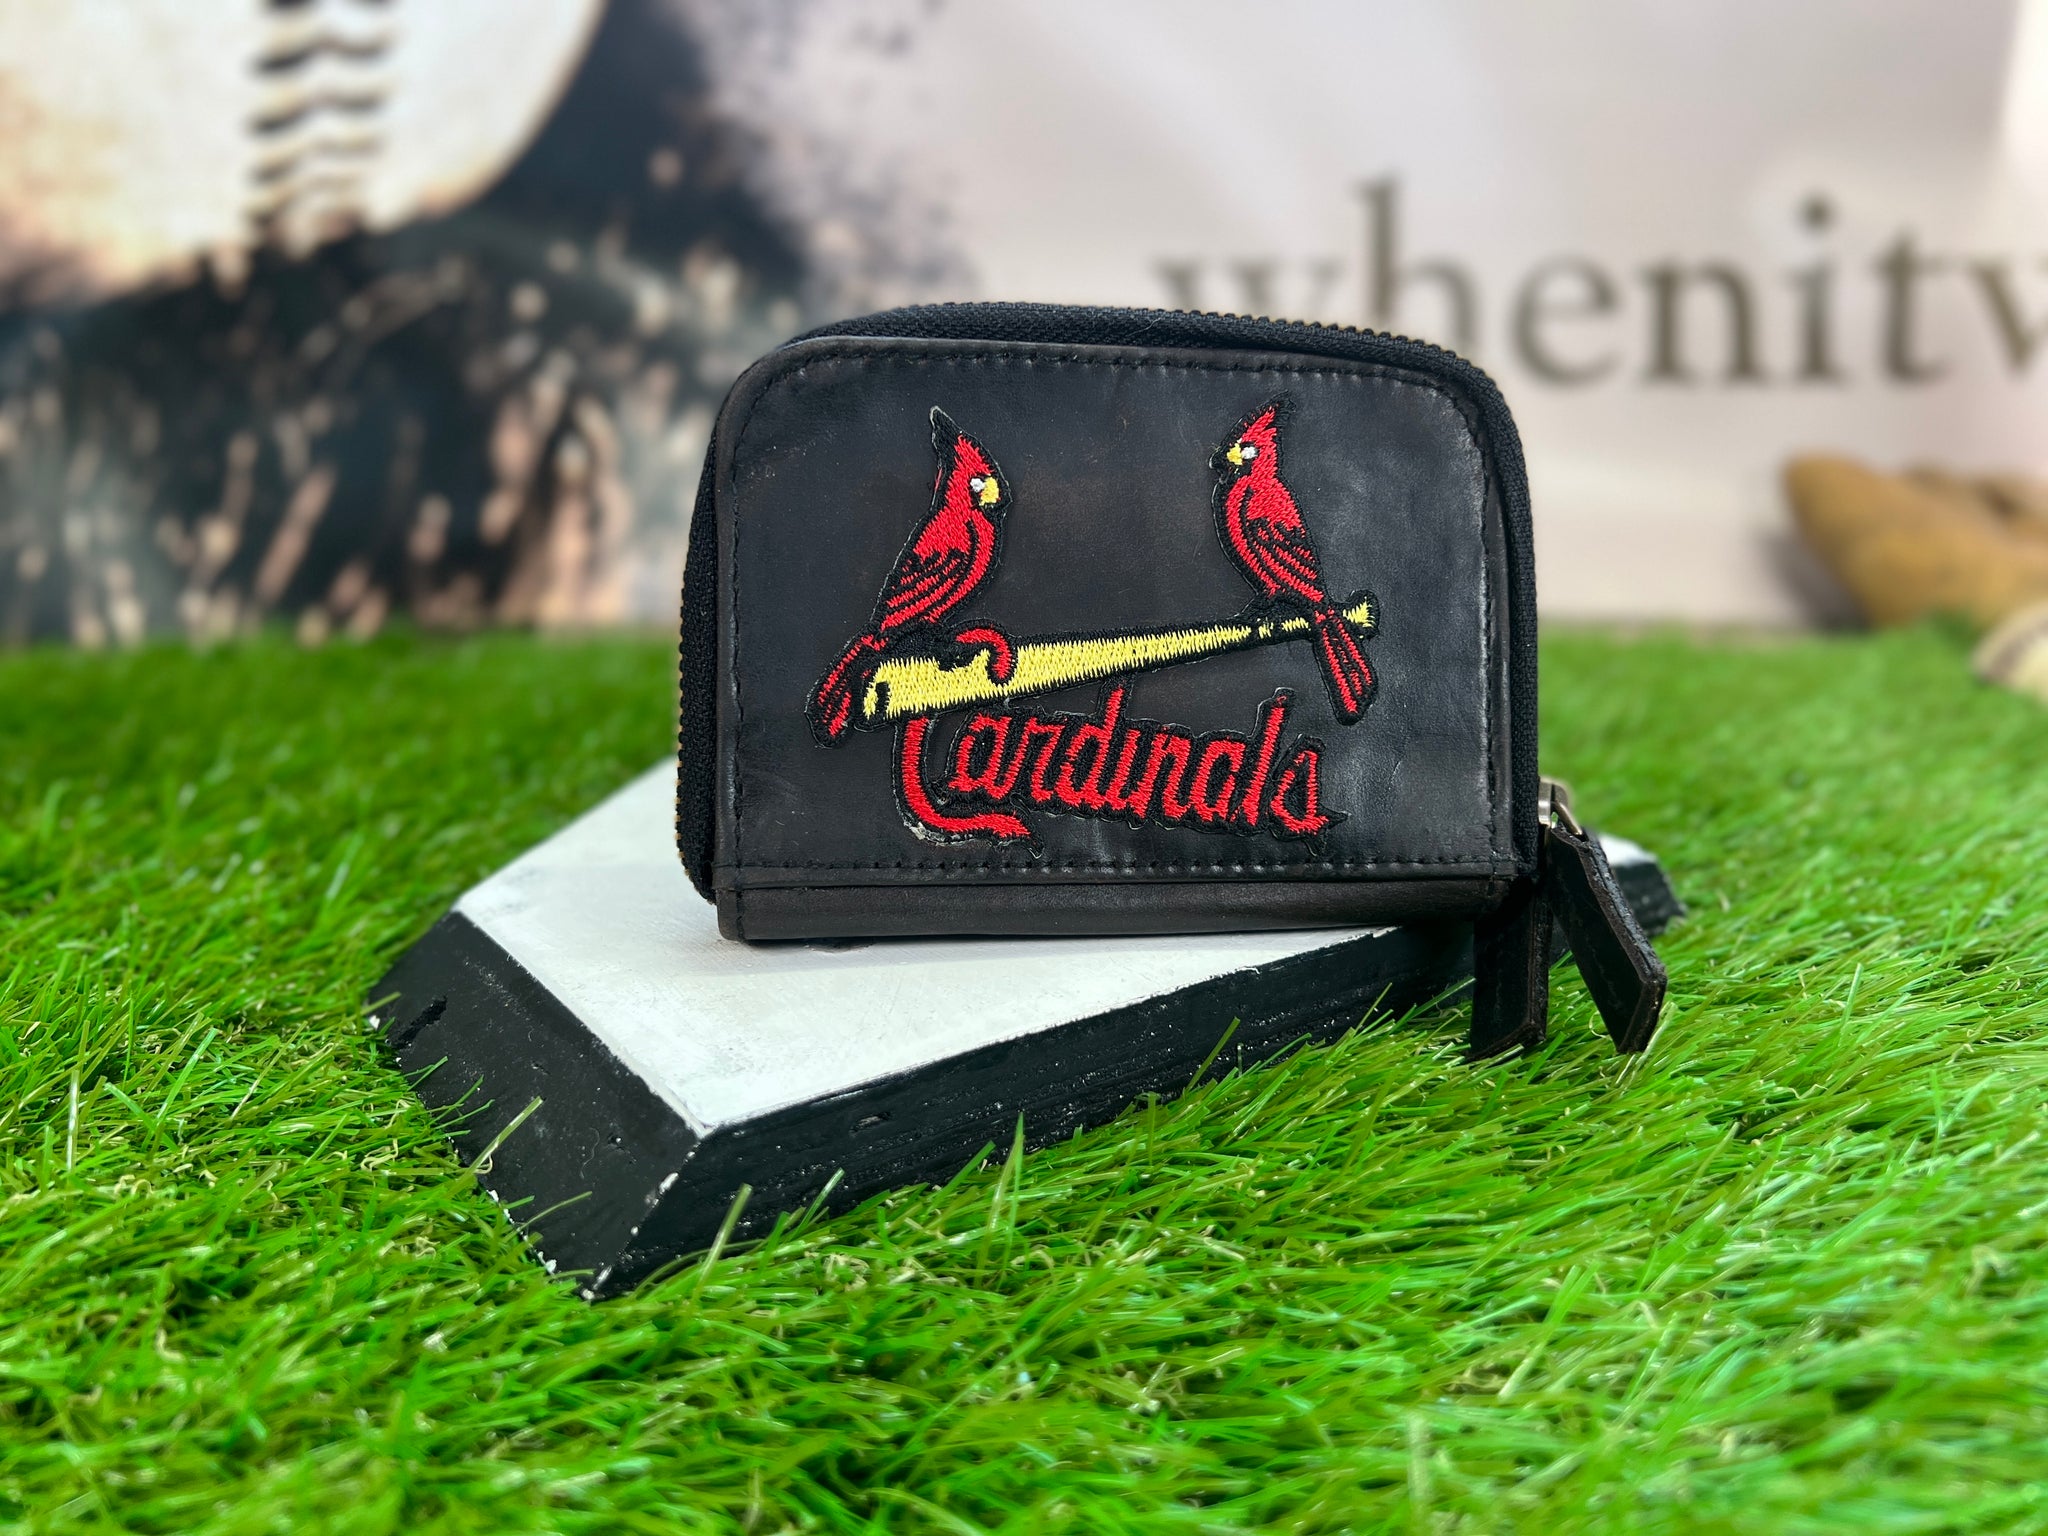 St. Louis Cardinals Wallet